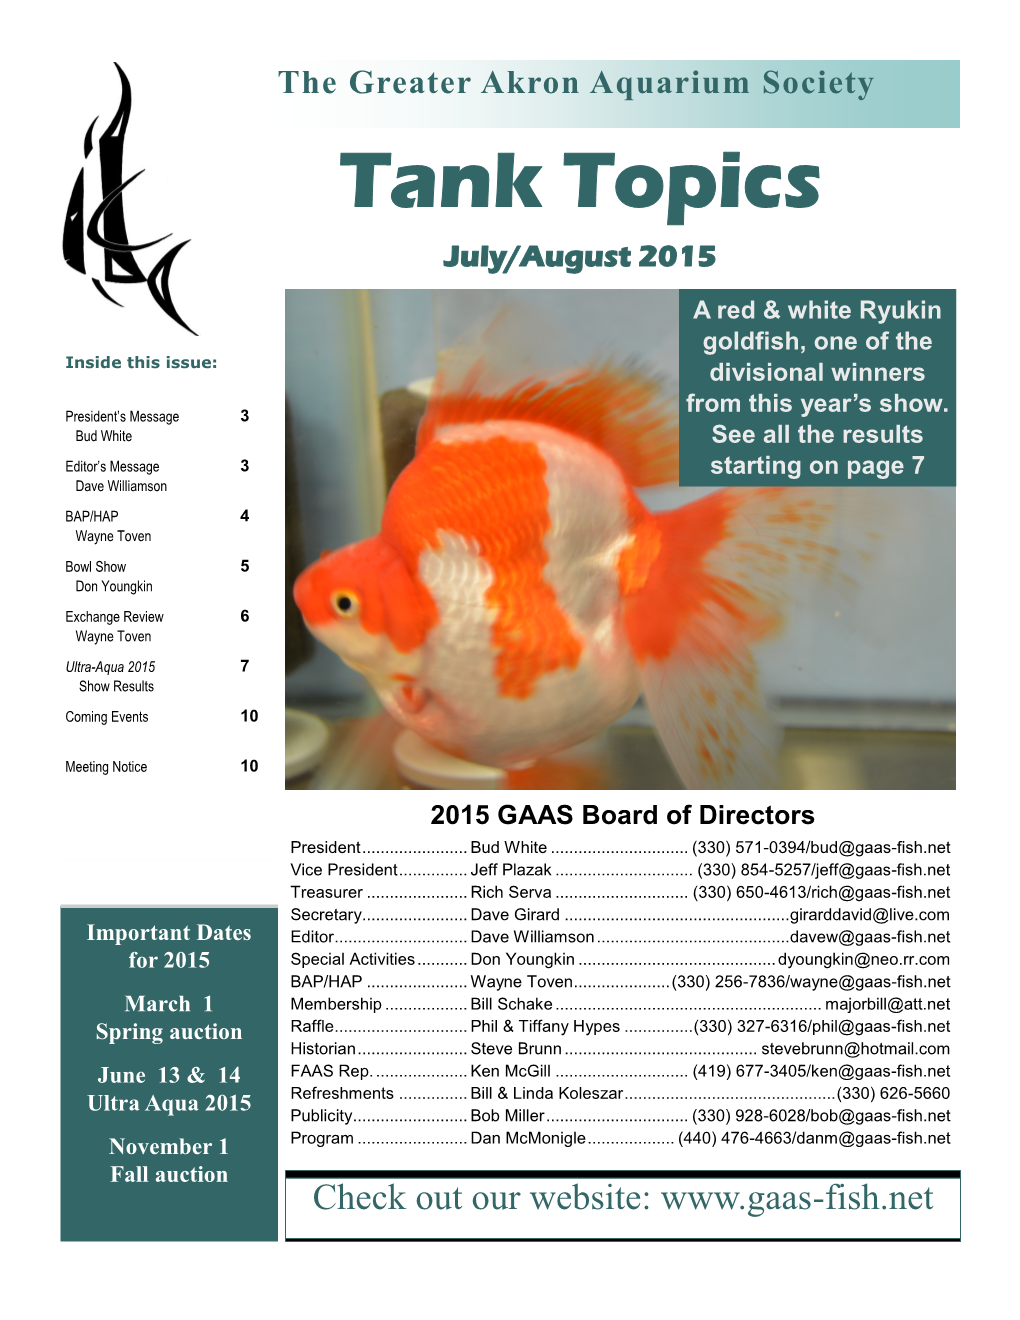 Tank Topics July/August 2015